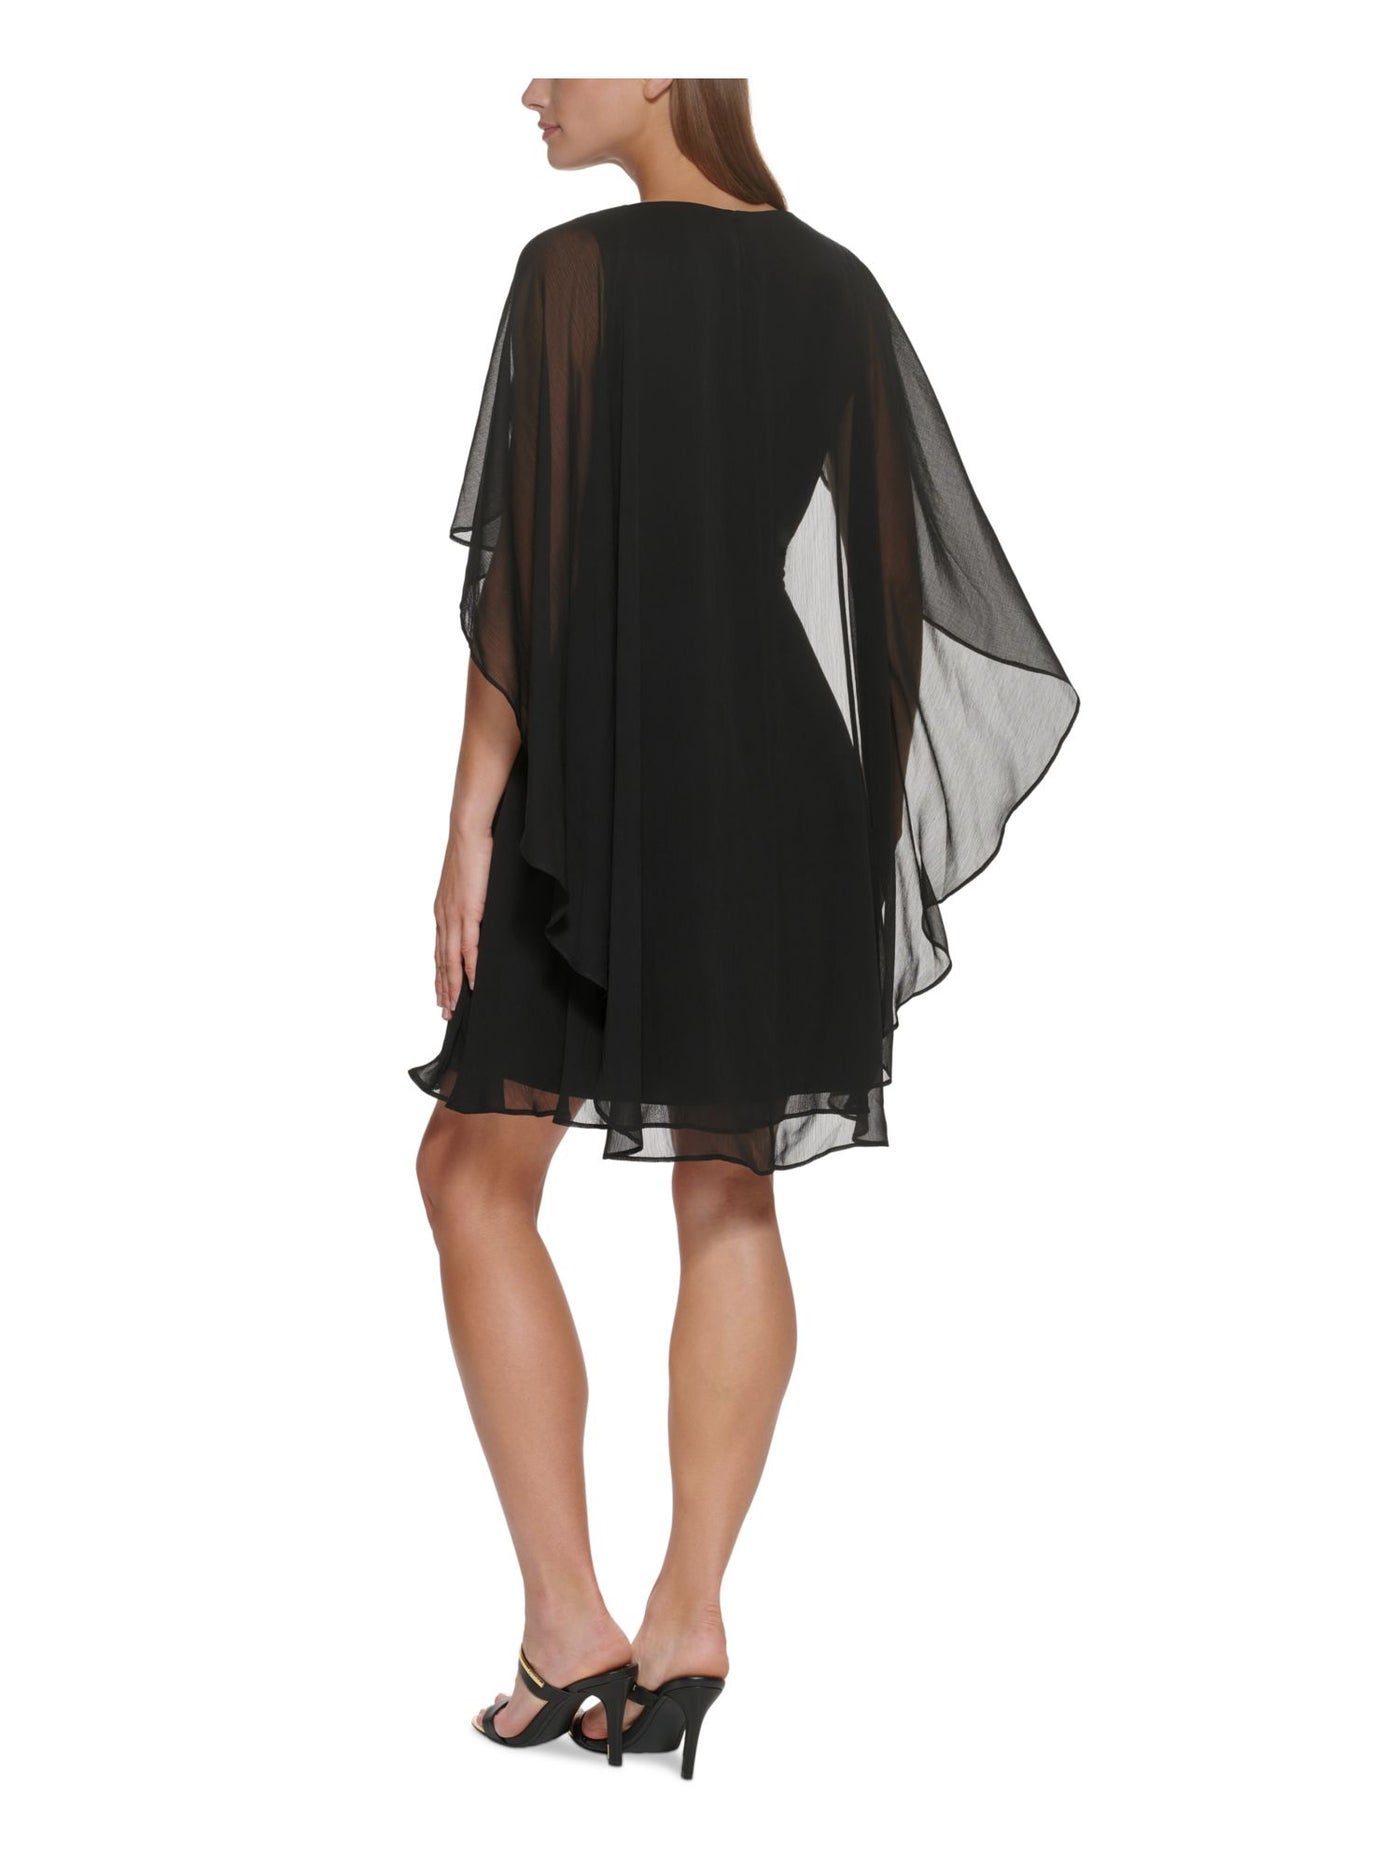 DKNY Womens Black Sleeveless V Neck Above The Knee Formal Fit + Flare Dress 6